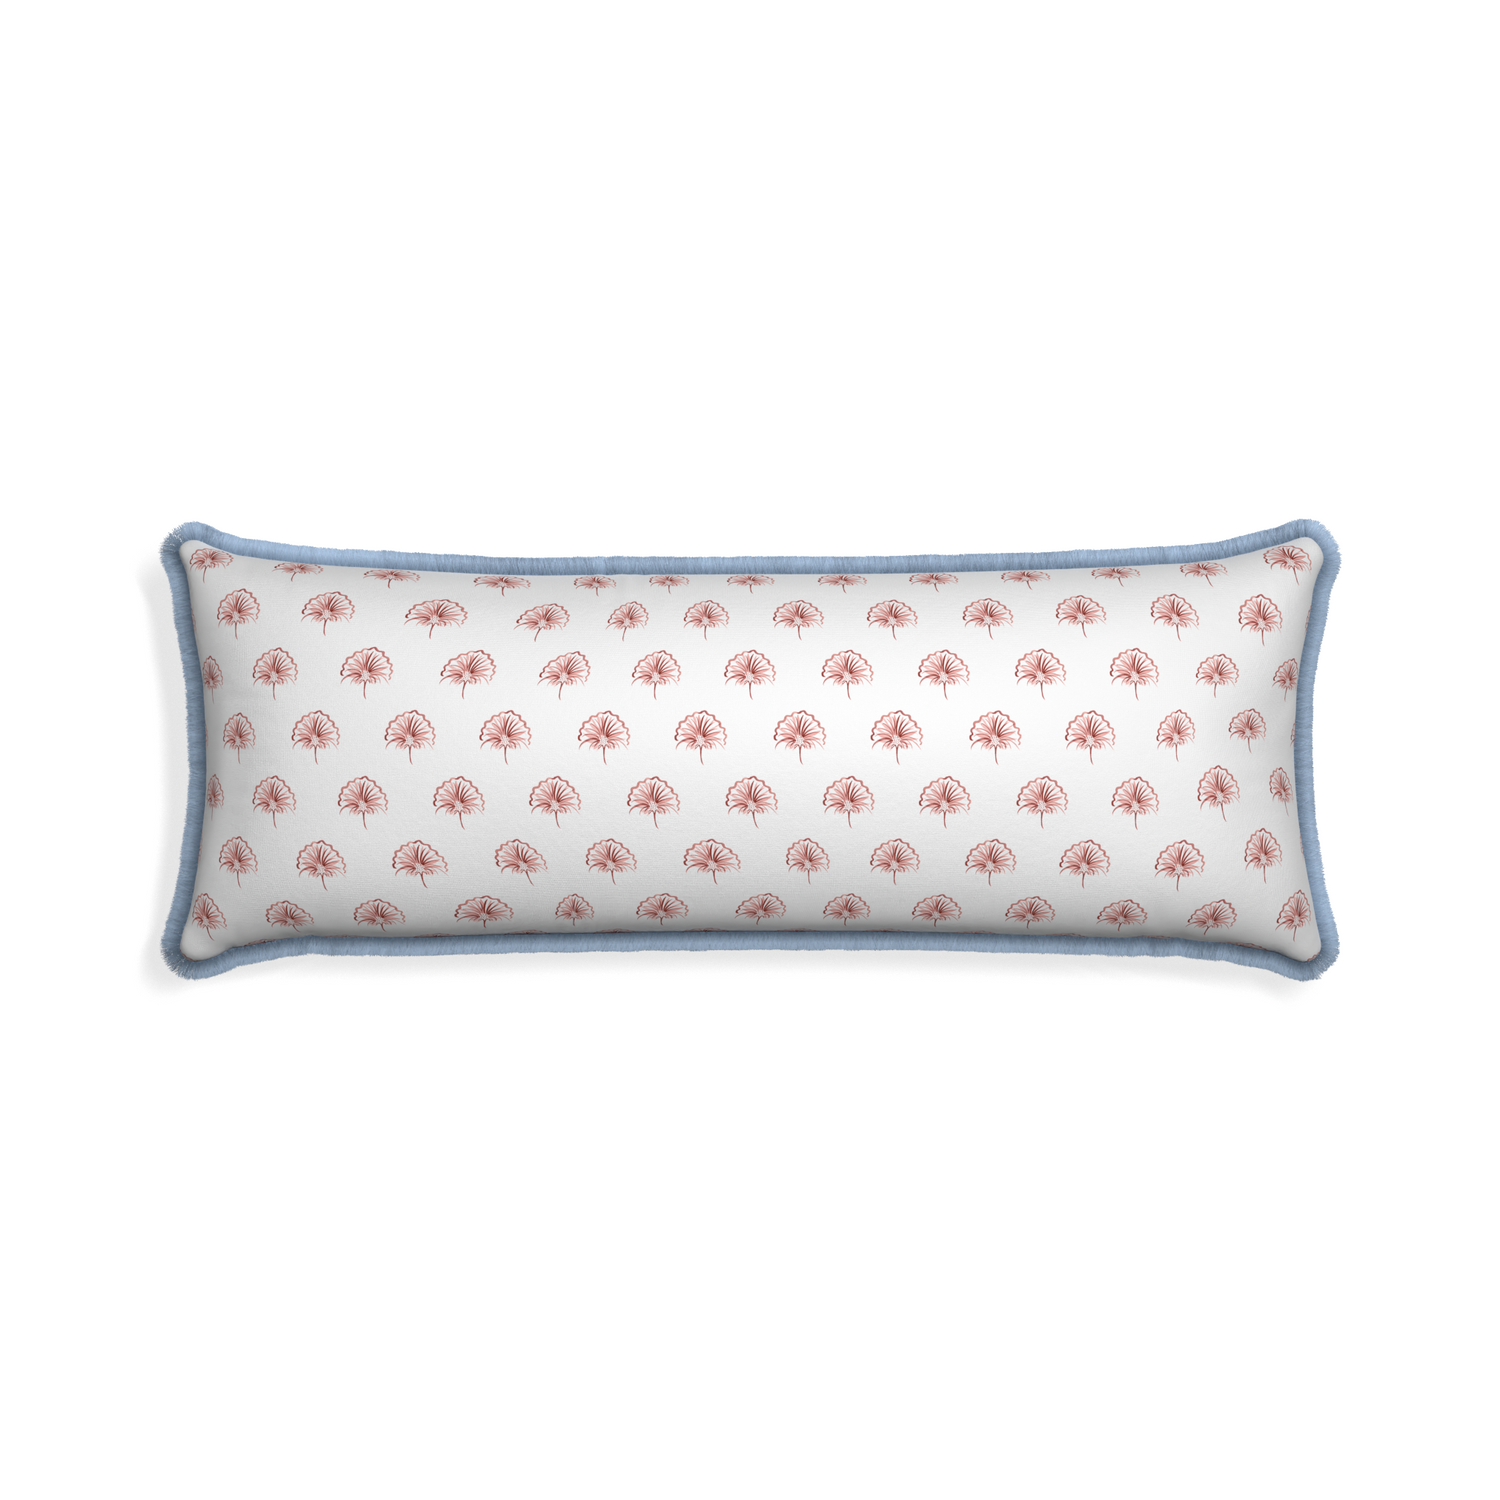 Xl-lumbar penelope rose custom pillow with sky fringe on white background